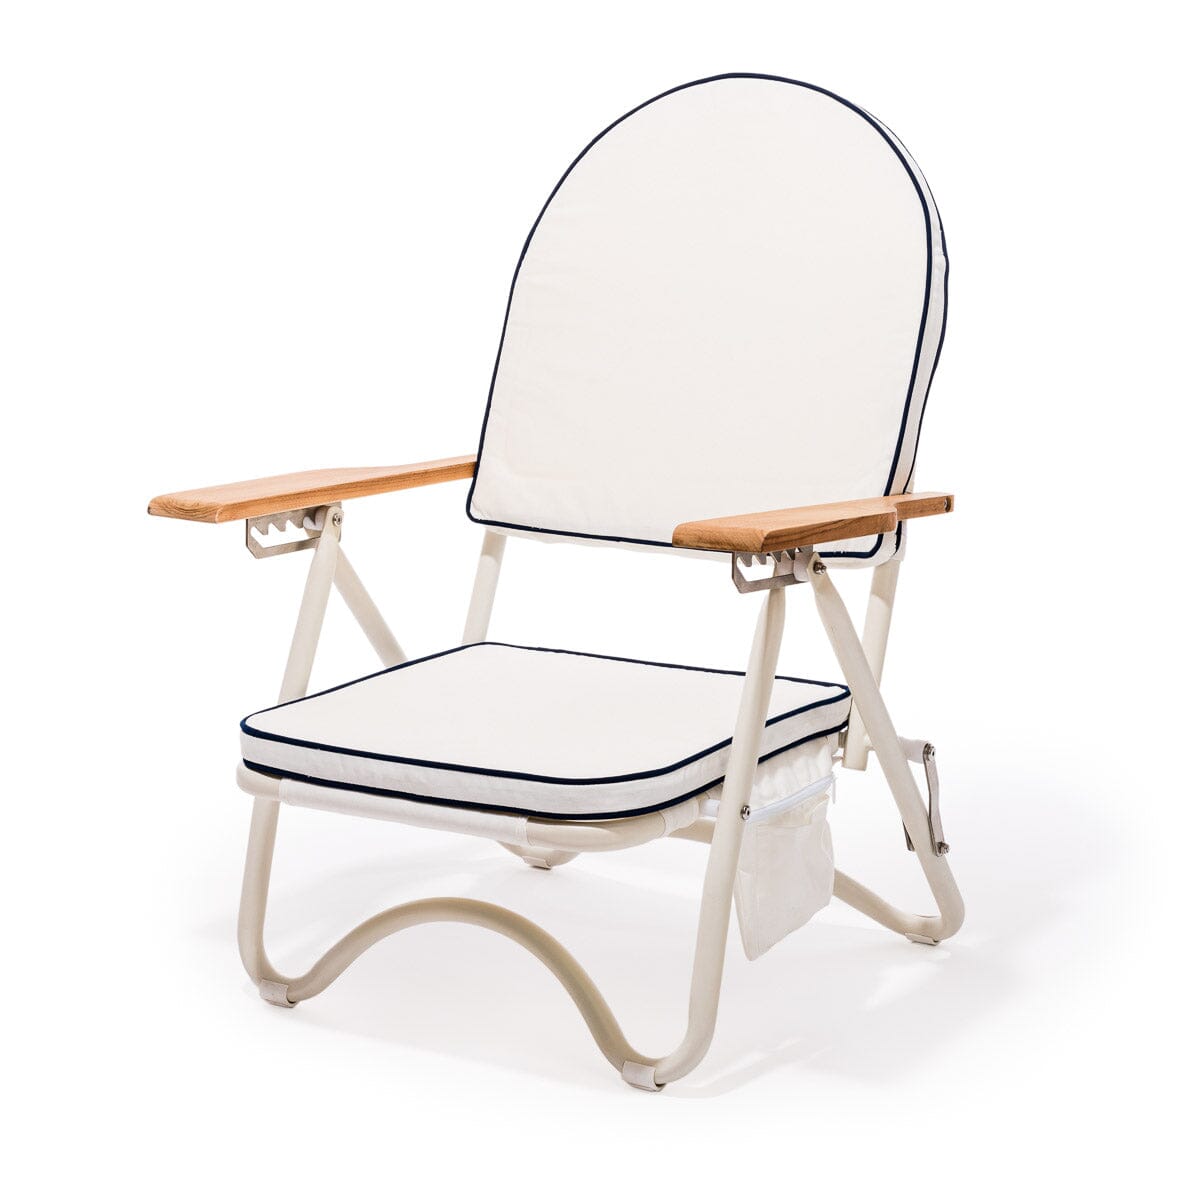 The Pam Chair - Rivie White Pam Chair Business & Pleasure Co Aus 